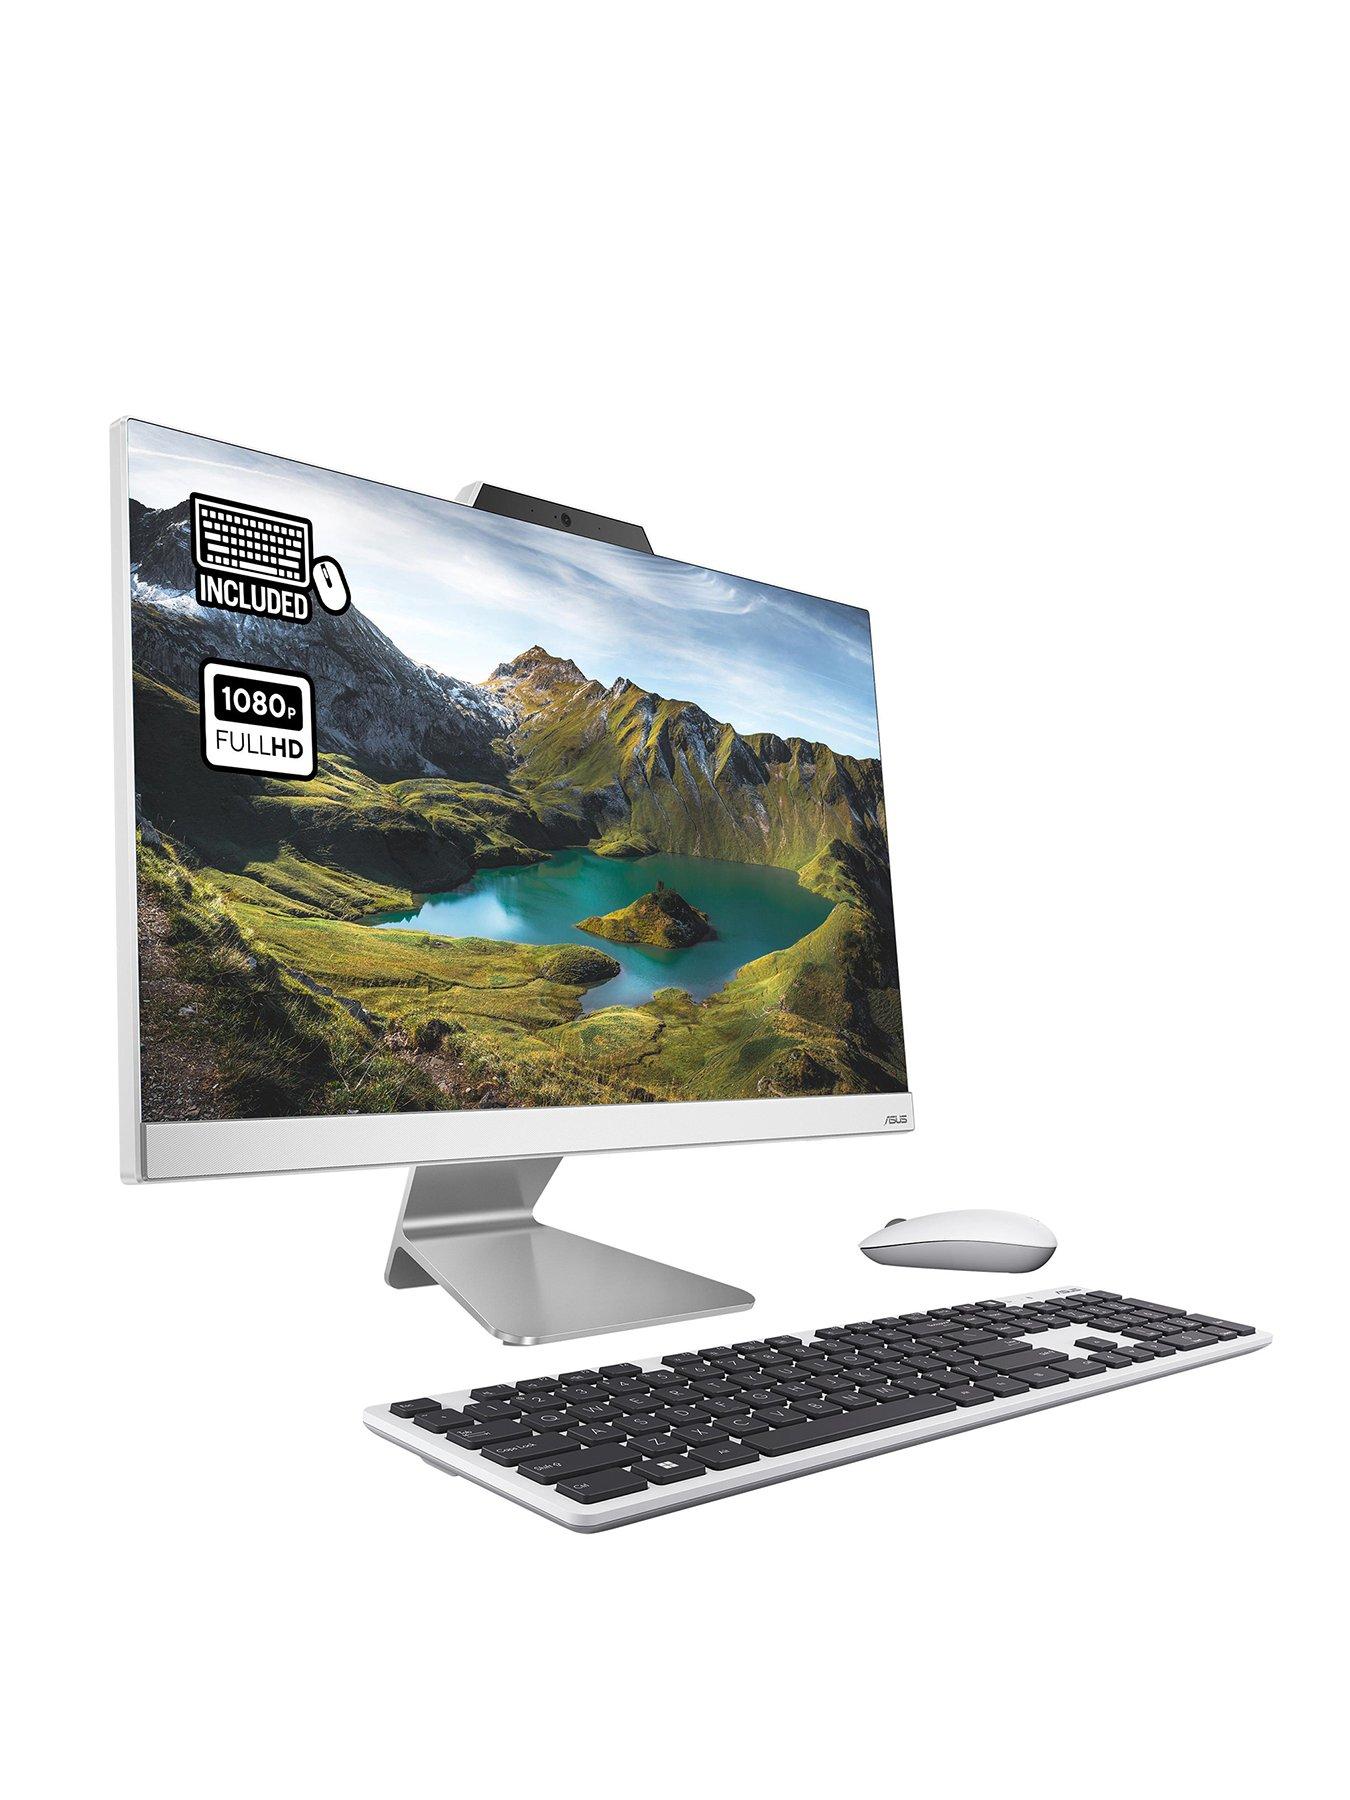 HP 21.5 All-in-One PC, Intel Pentium Silver, 8GB Memory, 128GB